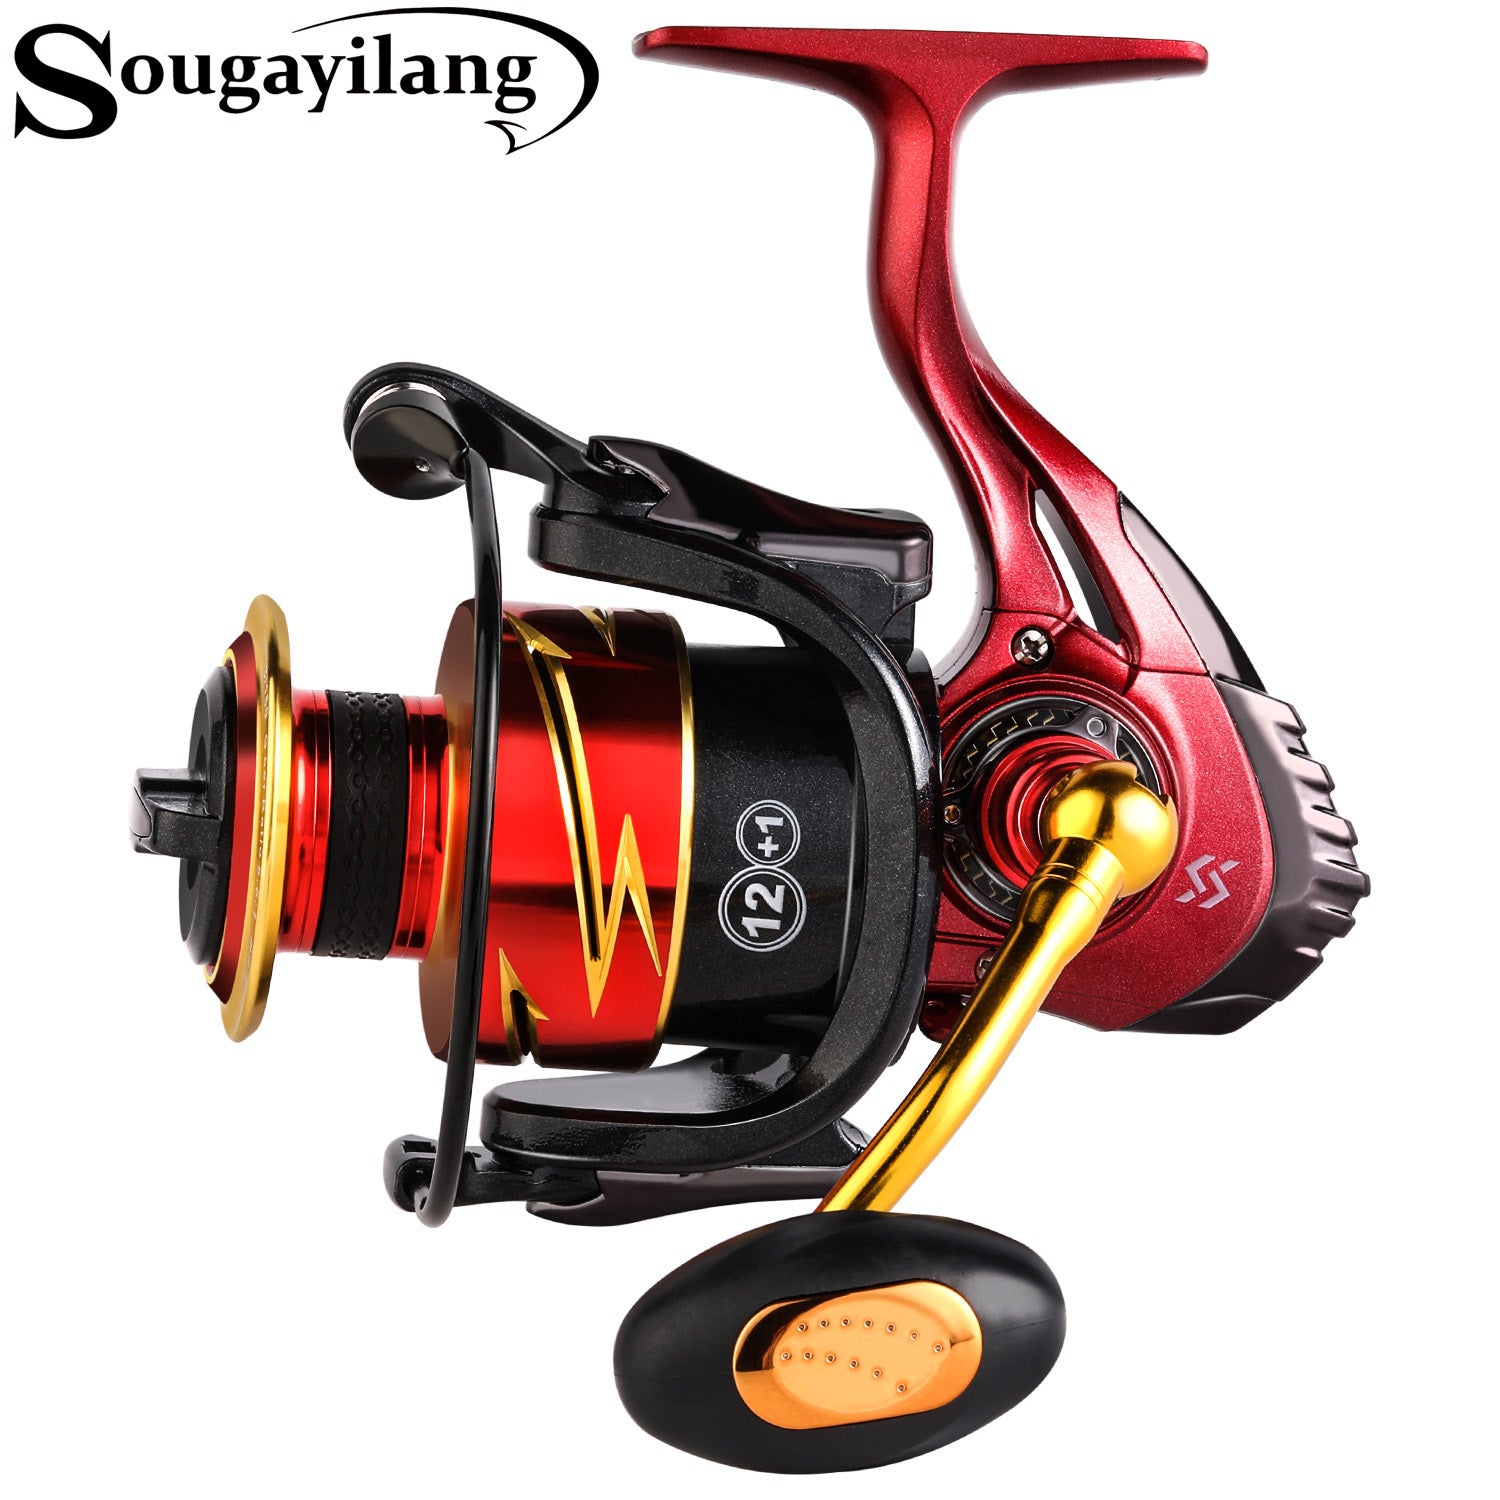 Sougayilang Spinning Fishing Reel 5.0:1 Gear Ratio 2000-7000 Size